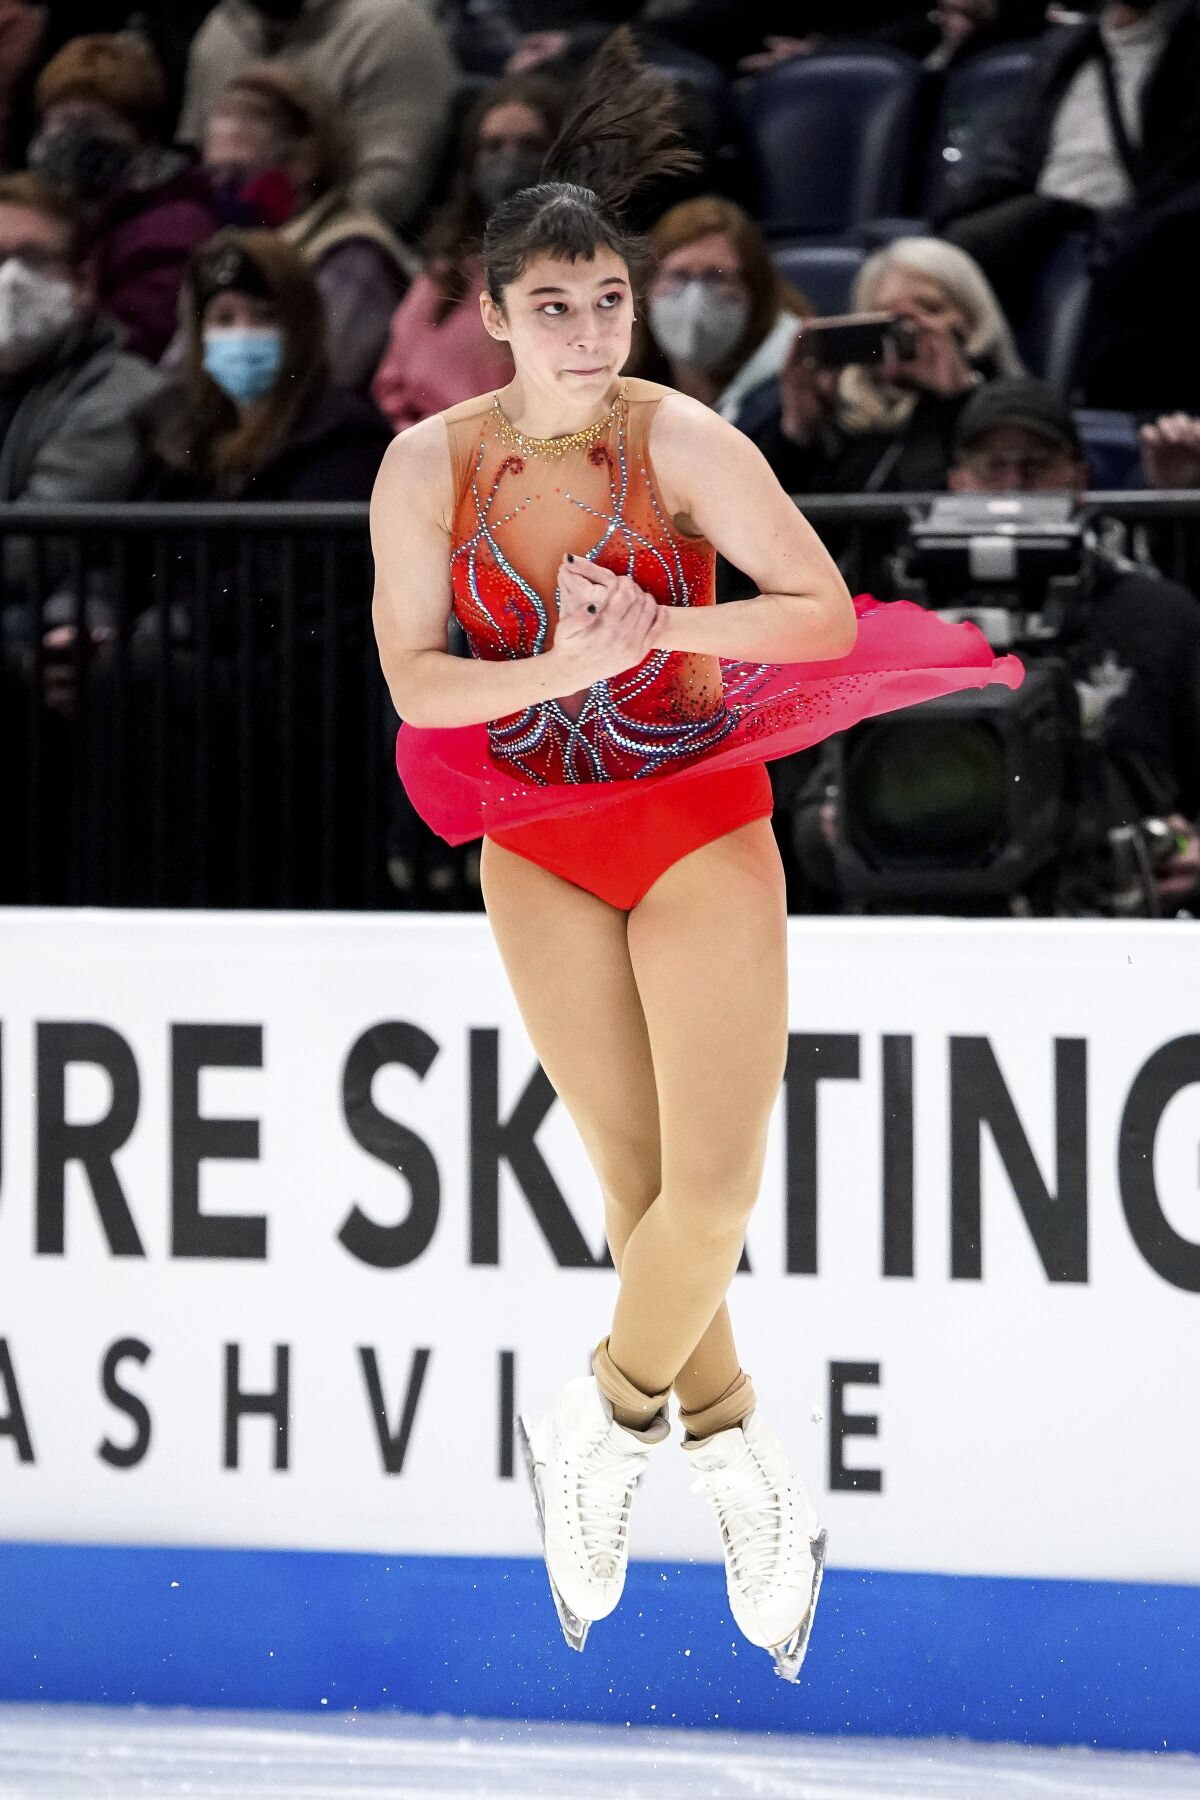 Alysa Liu skates in the ladies short program event during the U.S. Figure Skating Championships in Nashville, Tenn., Thursday, Jan. 6, 2022. (Andrew Nelles/The Tennessean via AP)